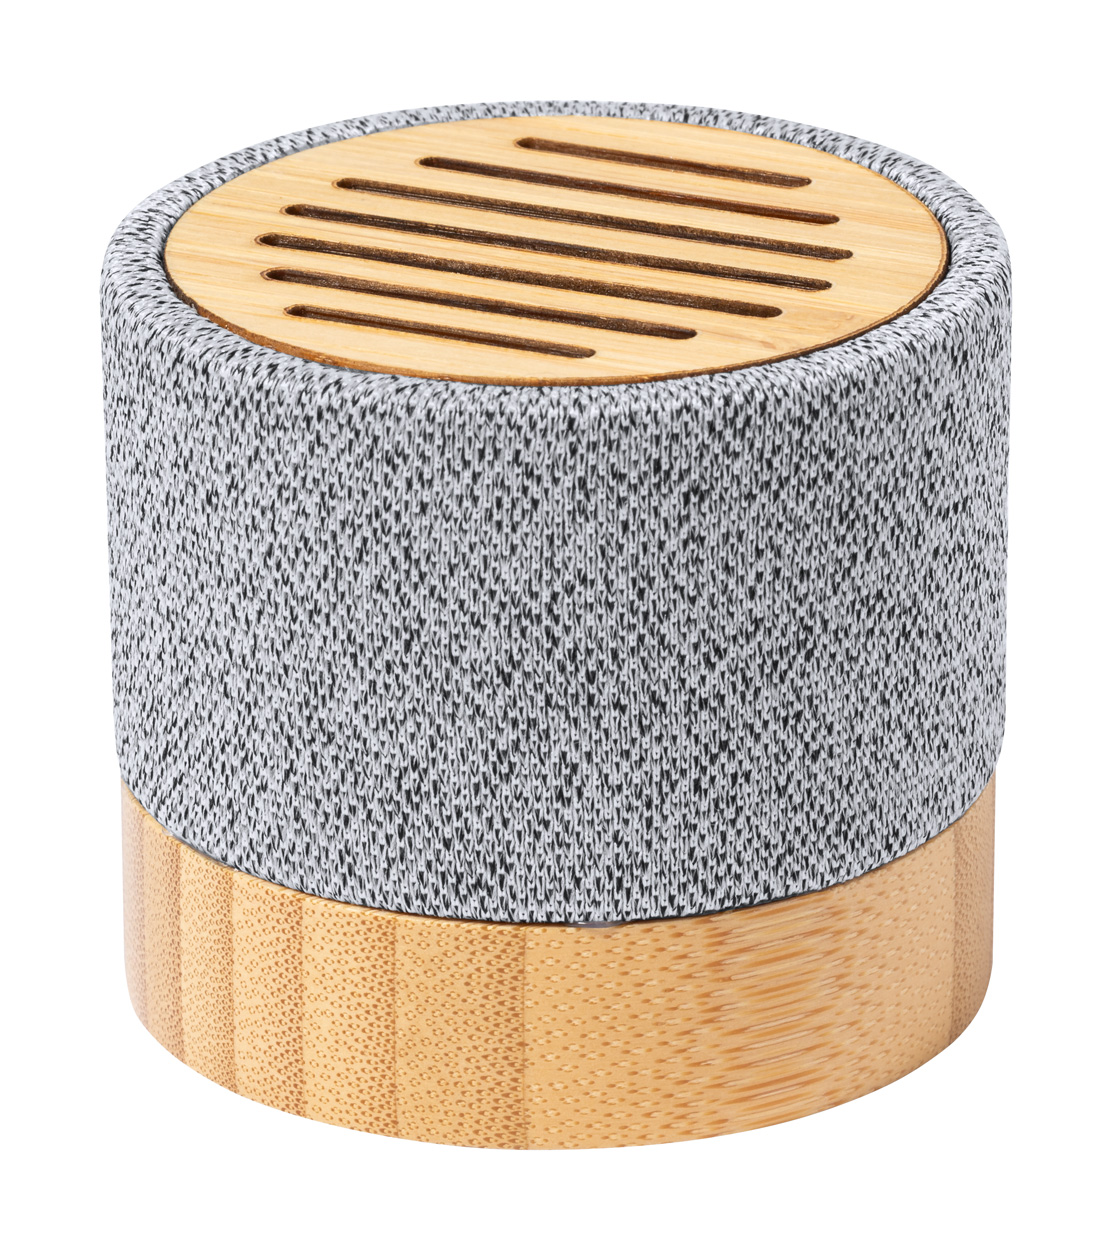 Wireless speaker BLARAK with fabric surface - grey / natural